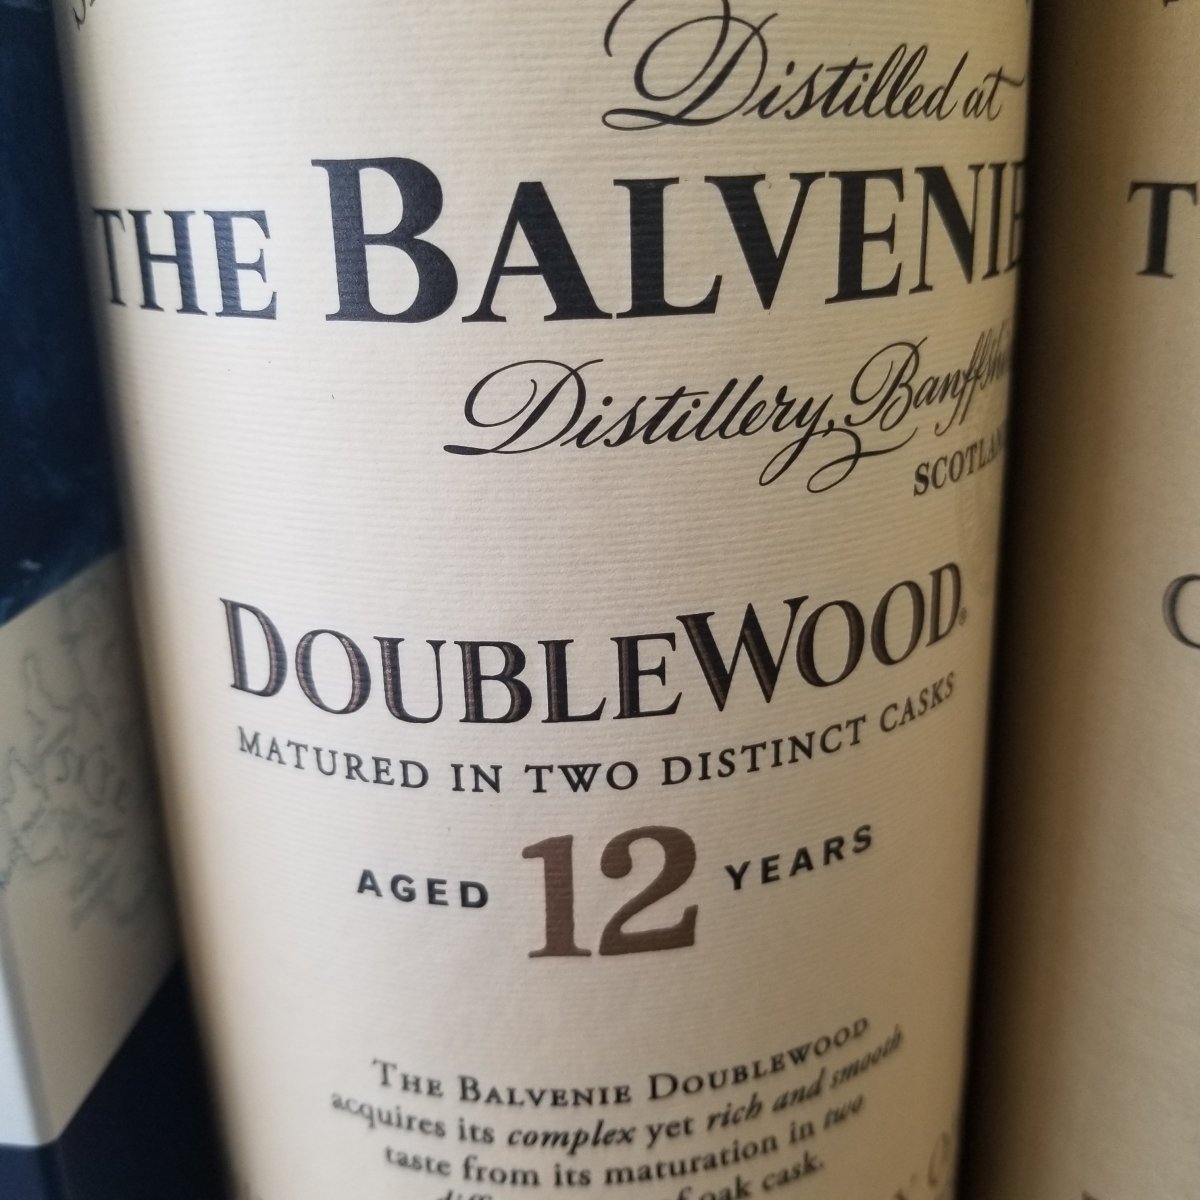 Single Malt Scotch Whisky 12 Year Old Doublewood The Balvenie 0,7 ℓ